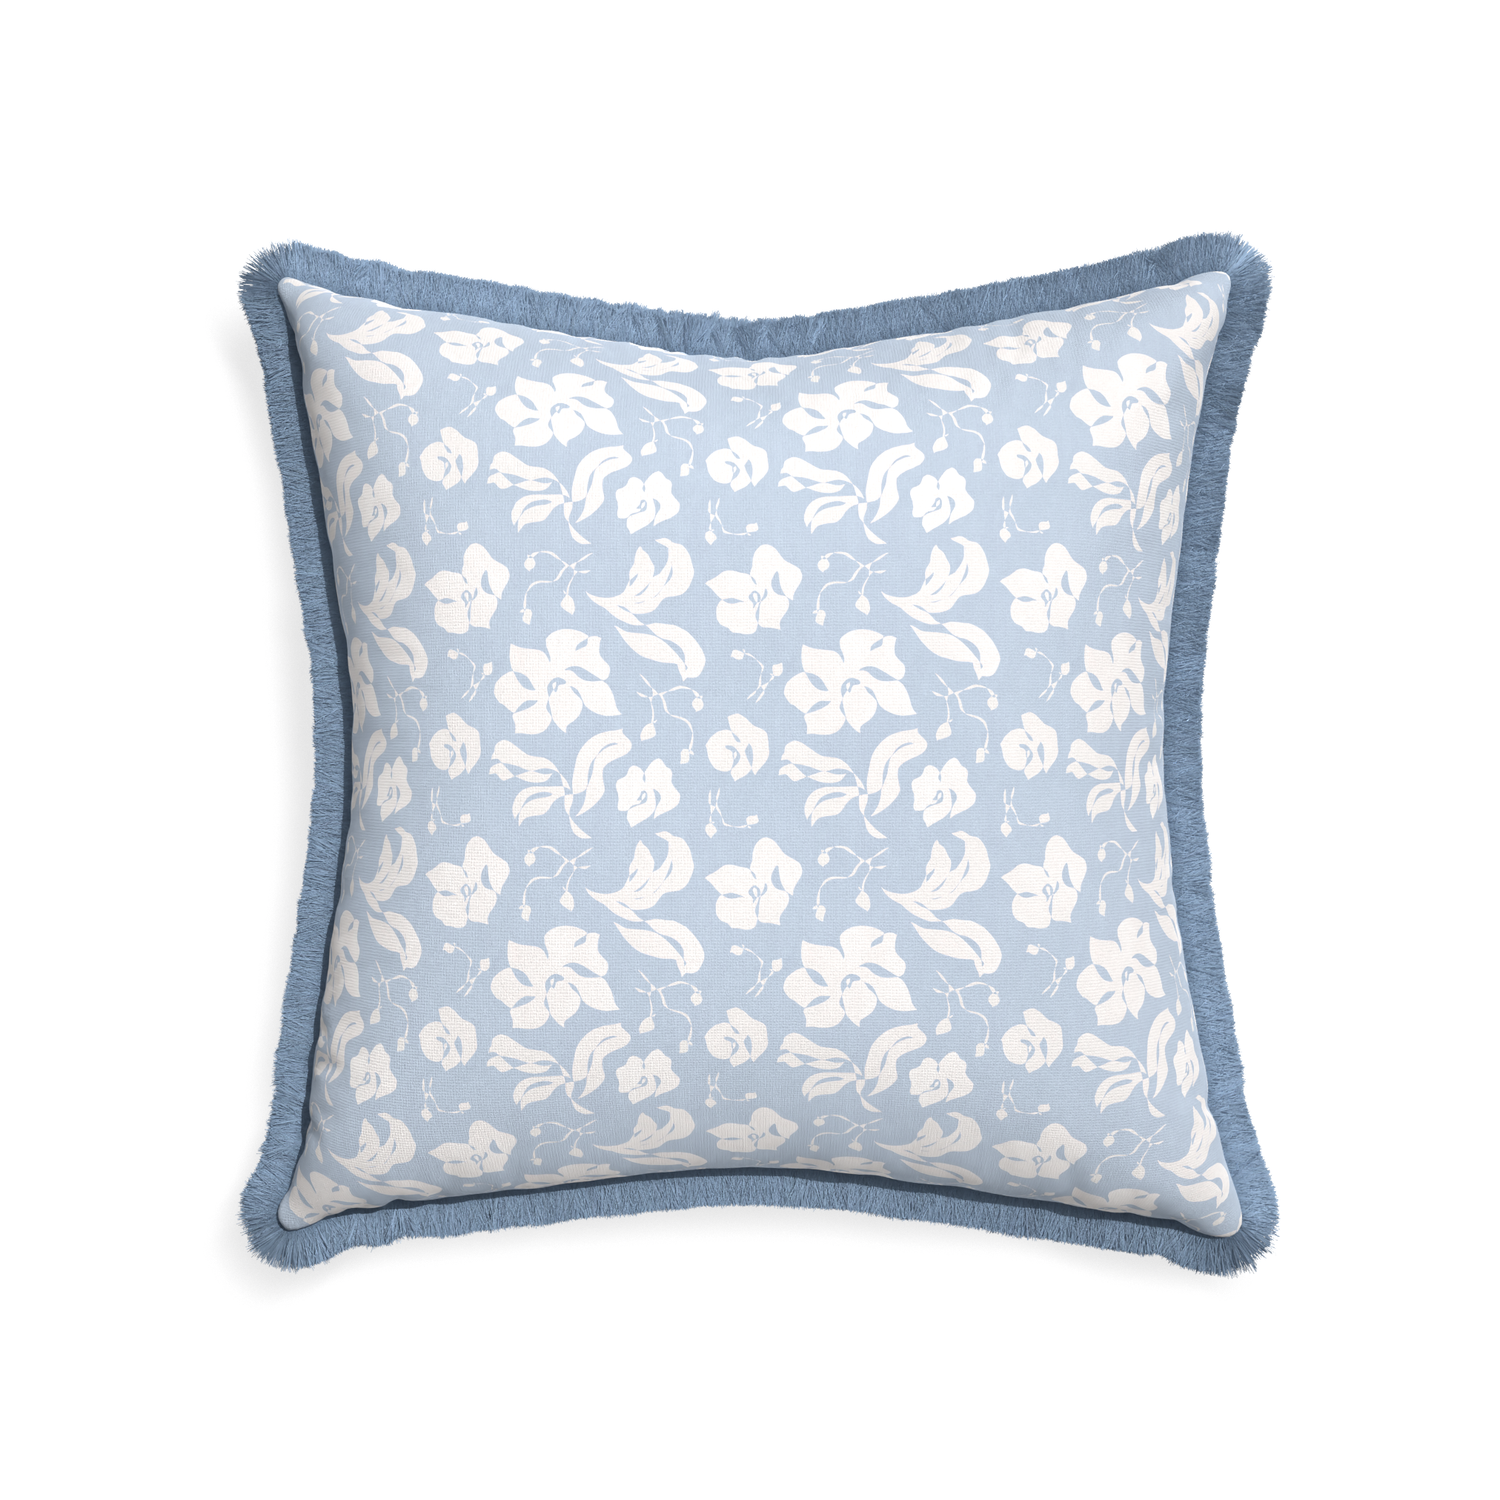 22-square georgia custom pillow with sky fringe on white background